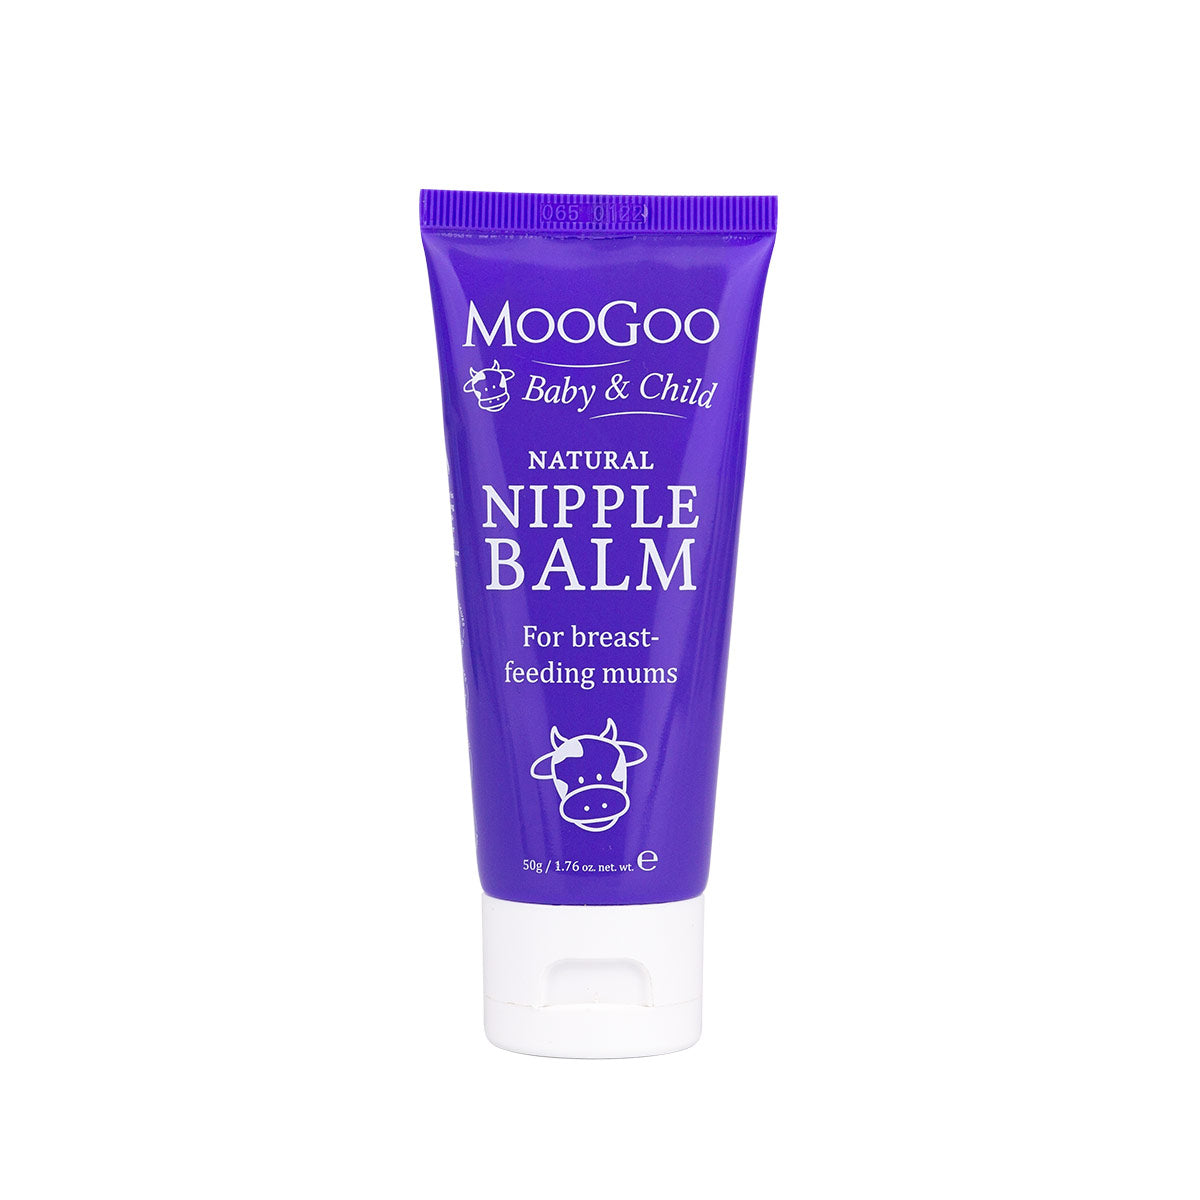 MooGoo - Natural Nipple Balm